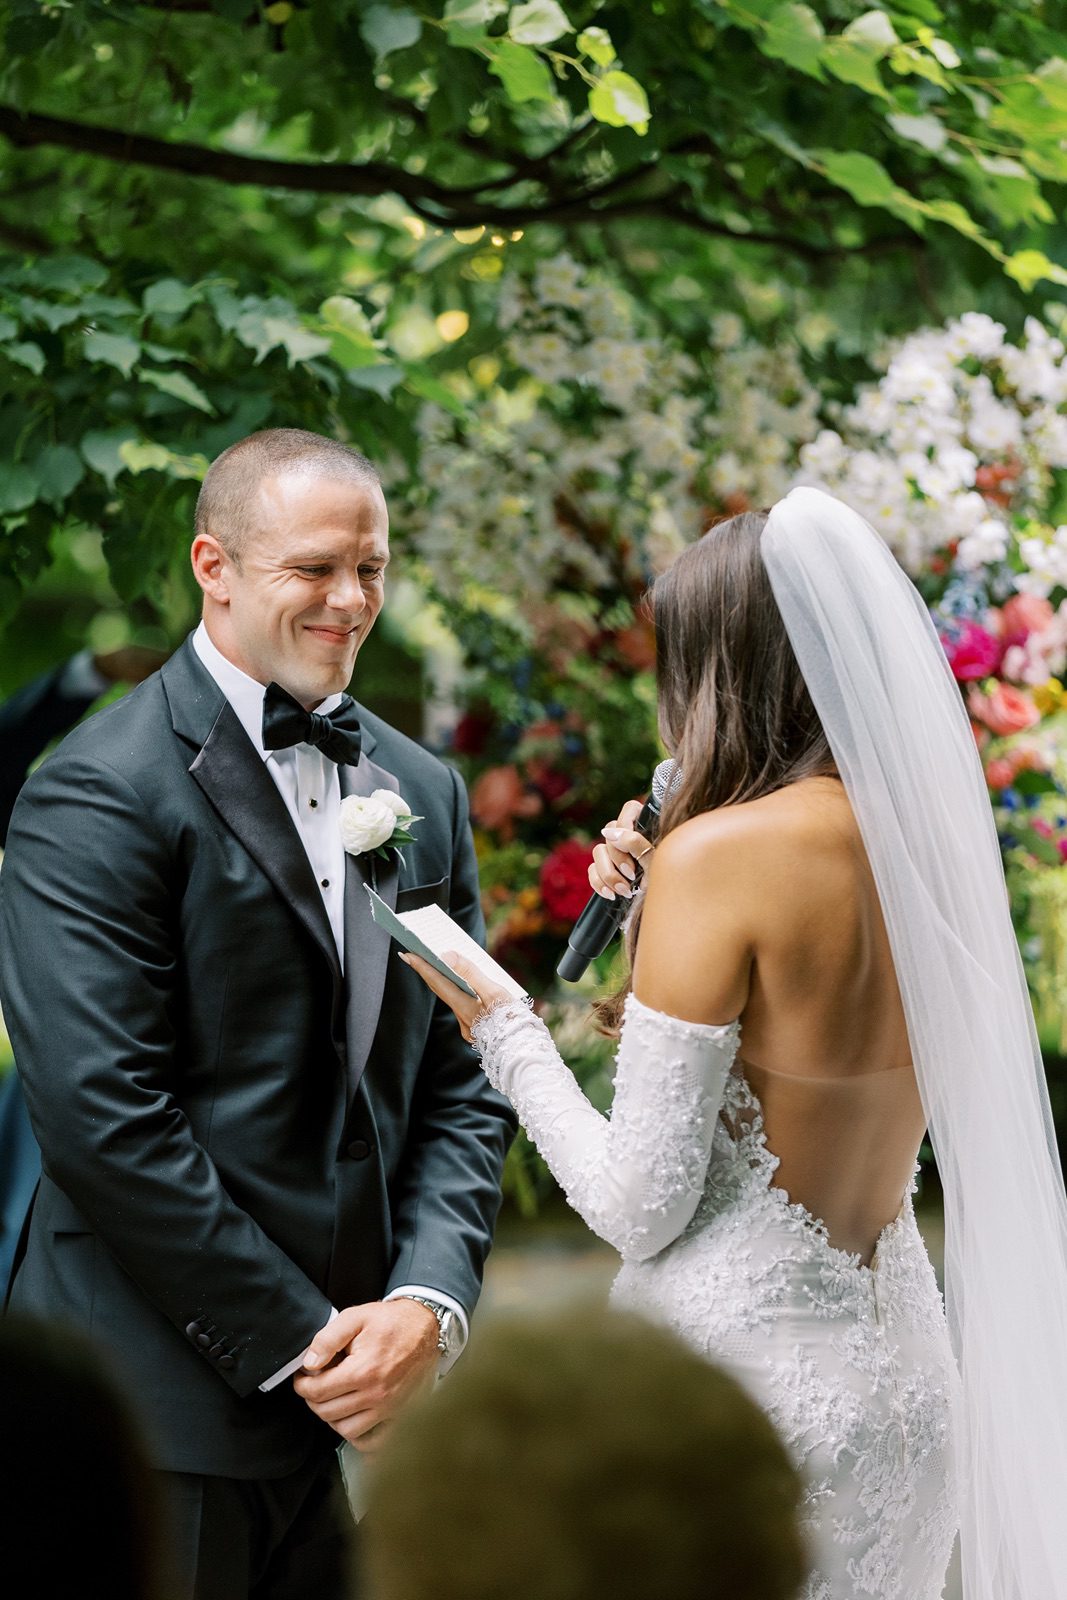 Bride says vows during Chicago Botanic Garden wedding ceremony